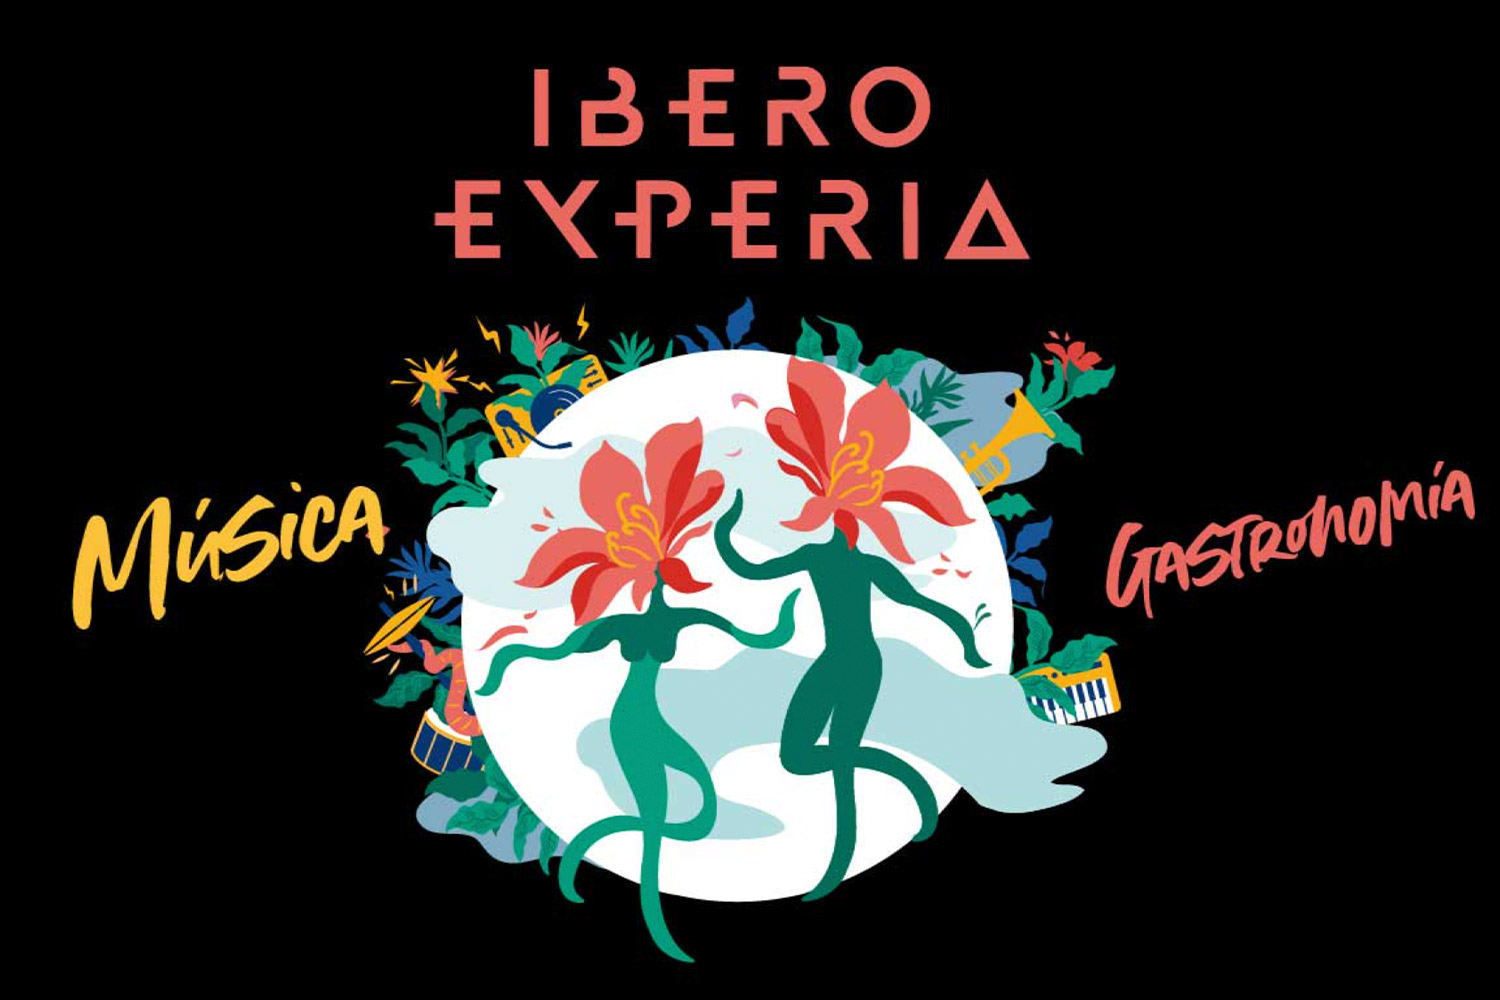 Cartel promocional Iberoexperia